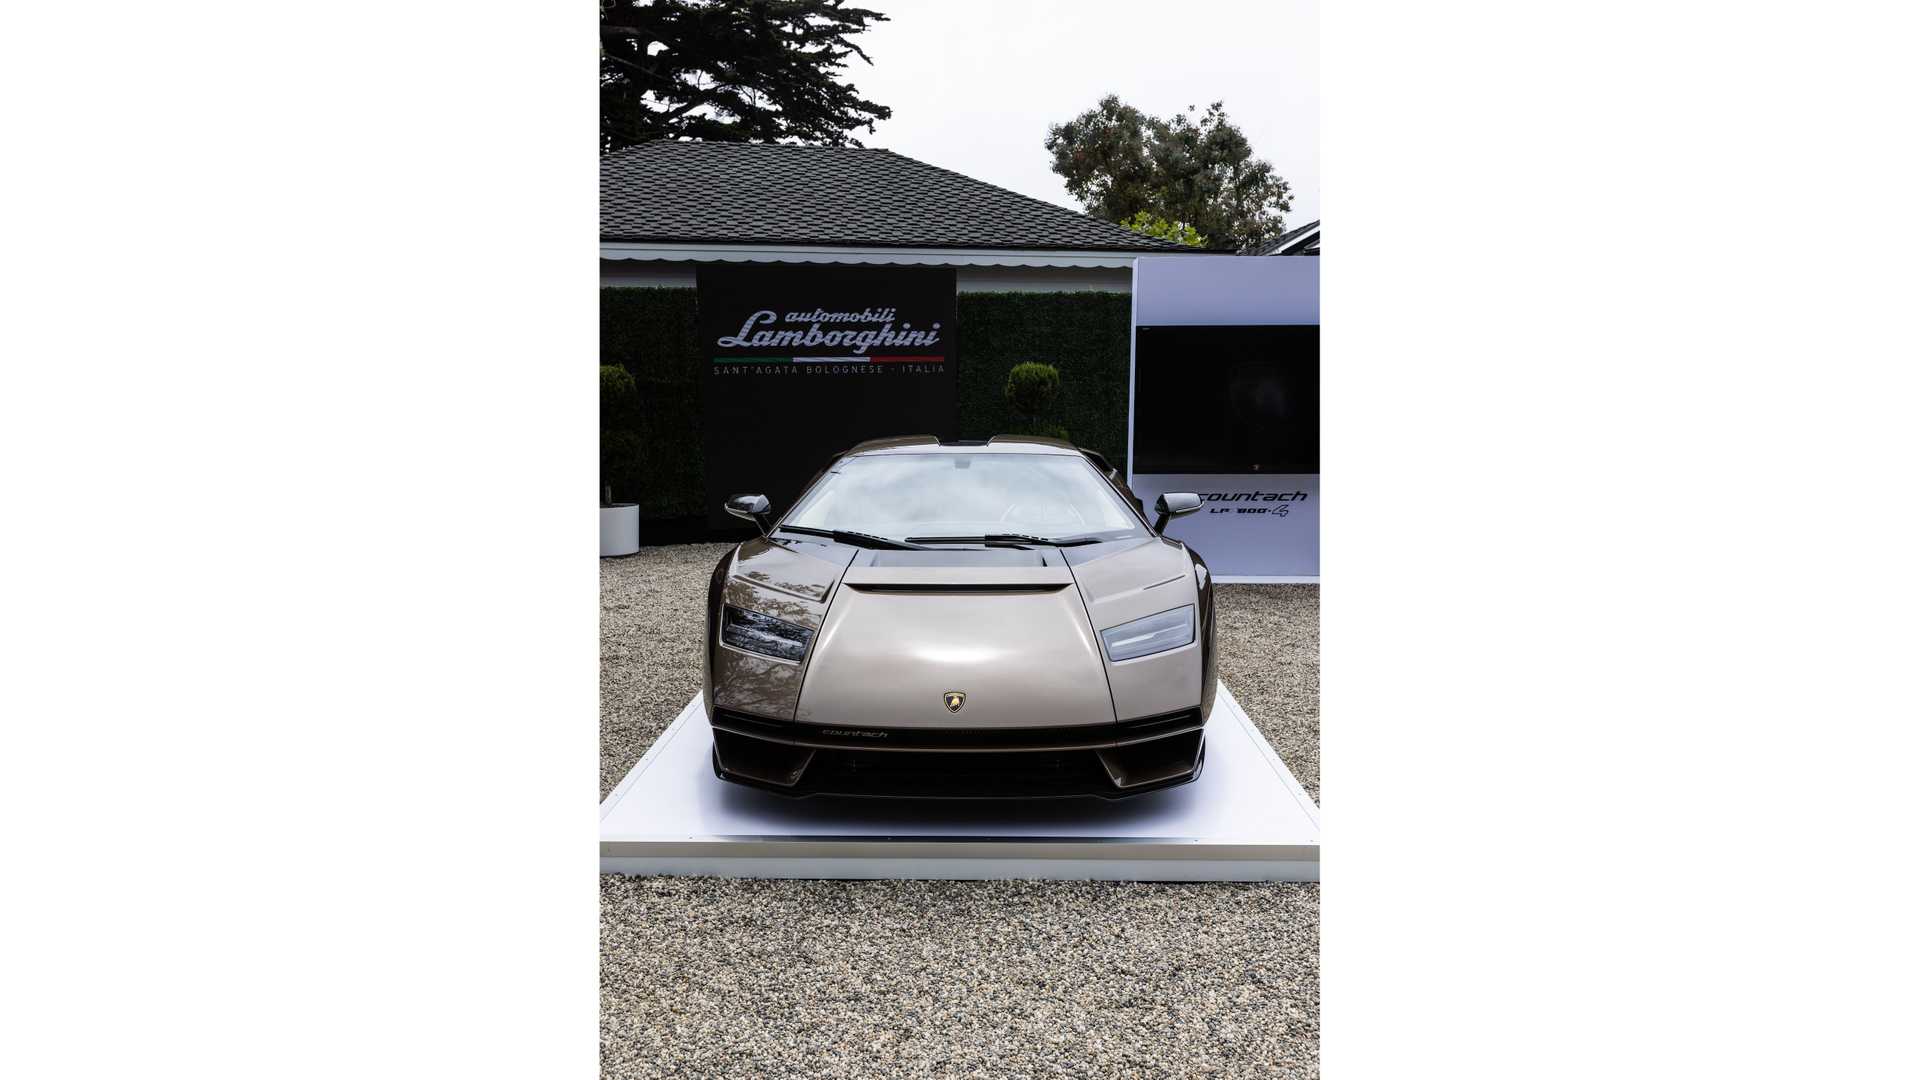 Lamborghini Countach LPI 800-4 US